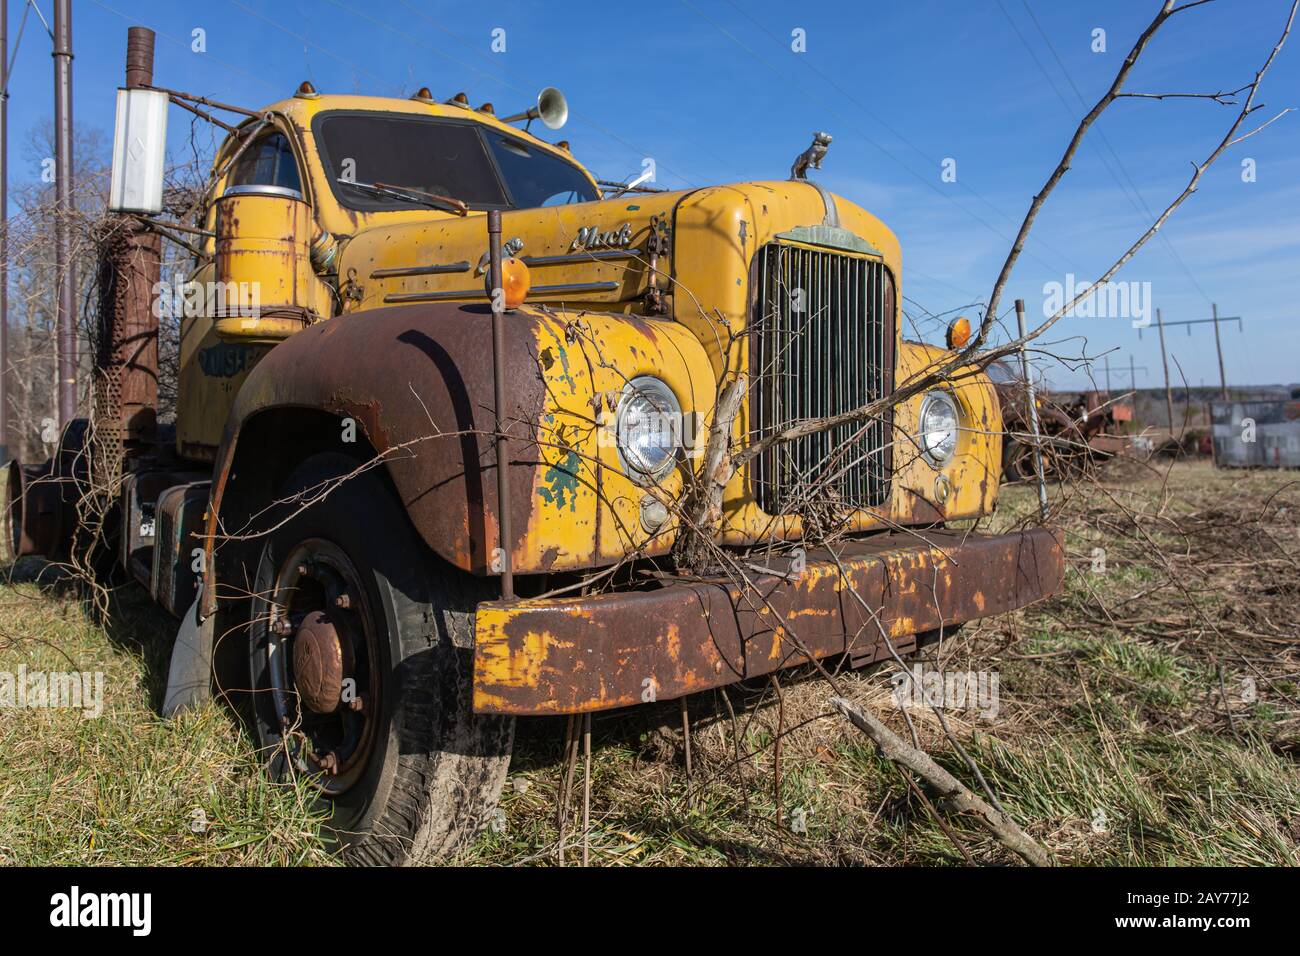 Worn out Mack Trucks. Stock Photo